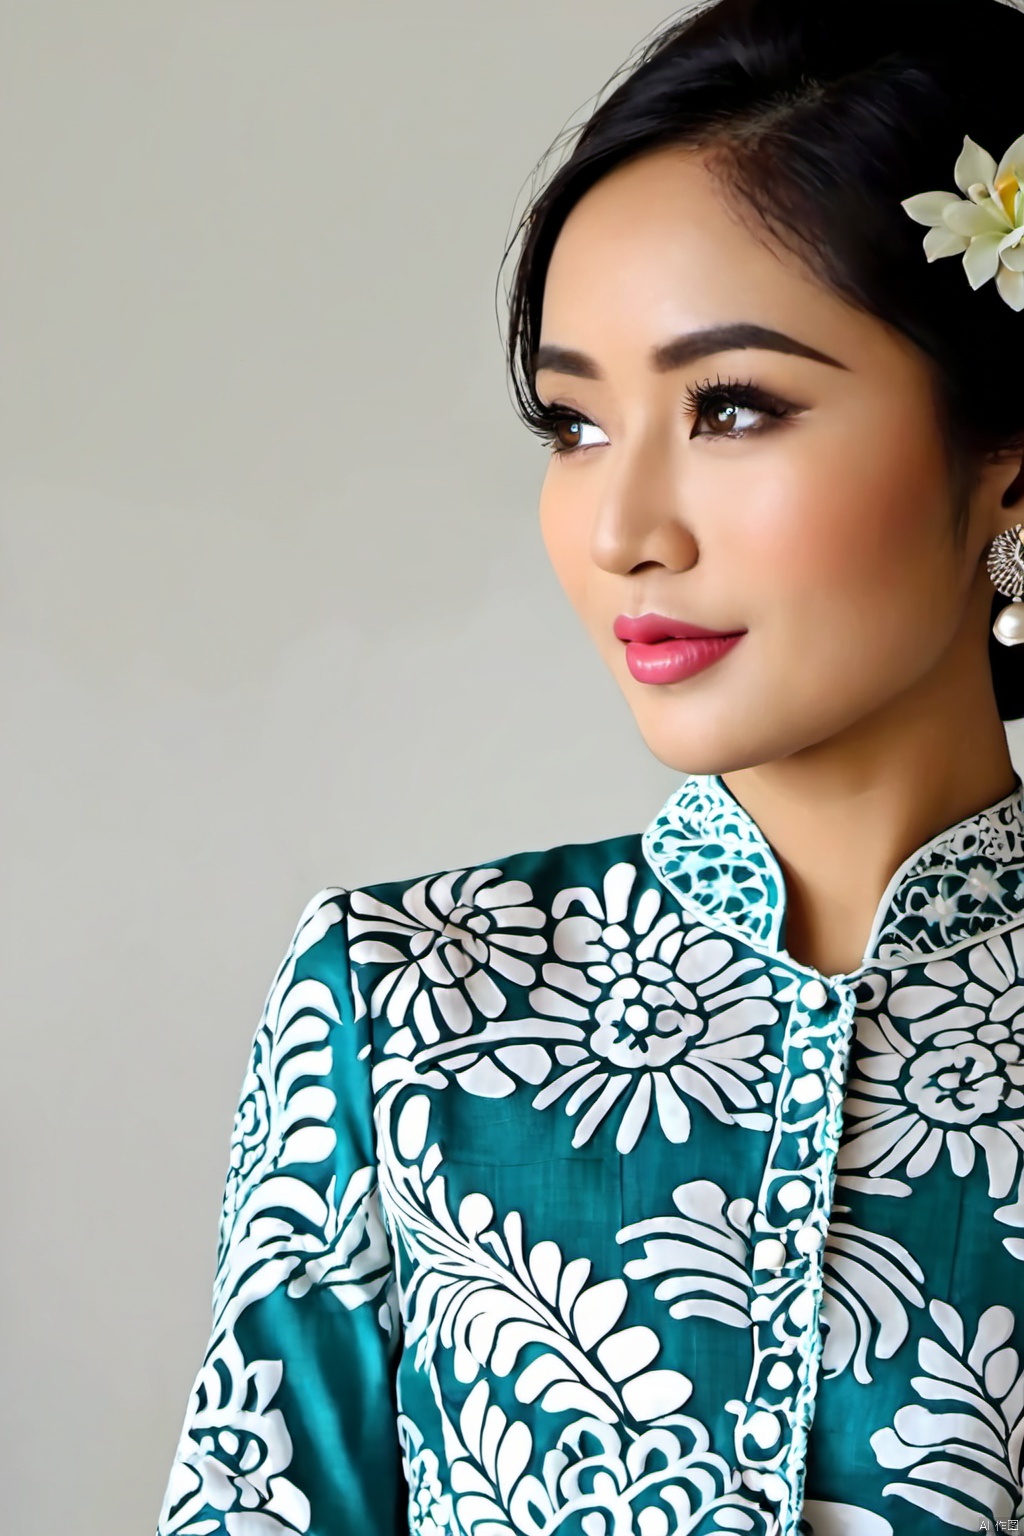  1 gadis cantik indonesia,rambut di sanggul dan ada hiasan kembang melati dan mahkota,memakai setelan kebaya adat Bali berwarna putih,rok kain batik.